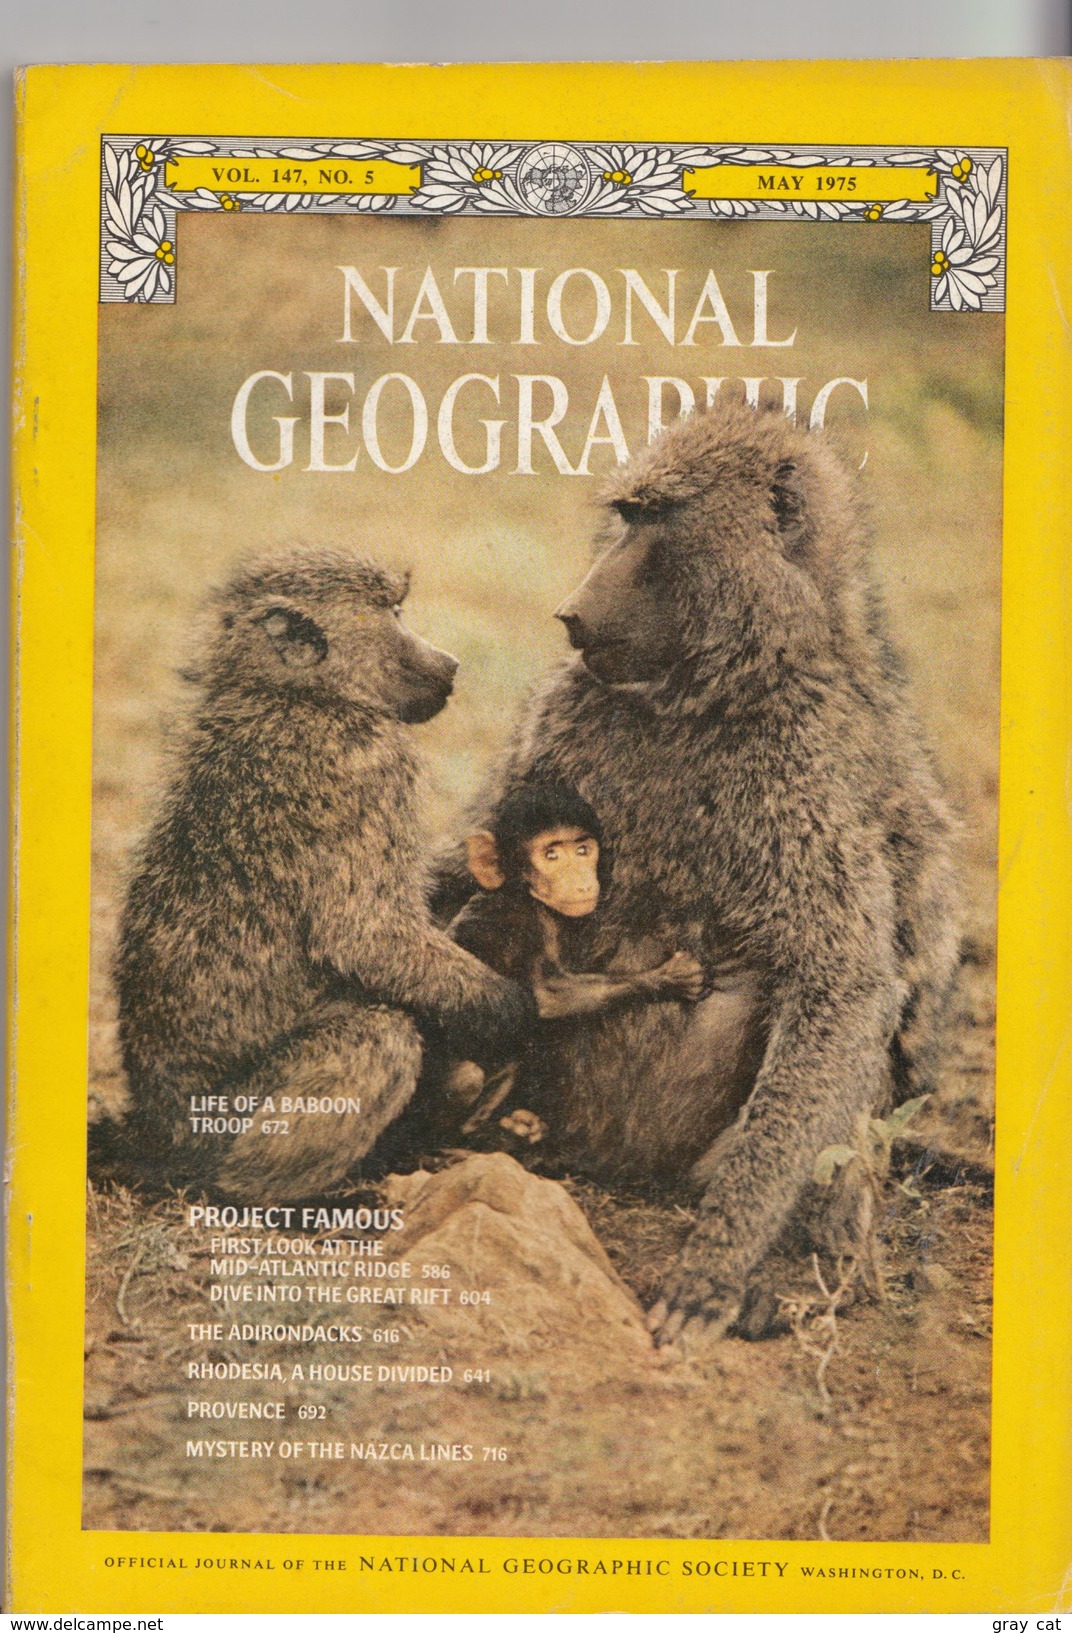 National Geographic Magazine Vol. 147, No. 5, May 1975 - Travel/ Exploration